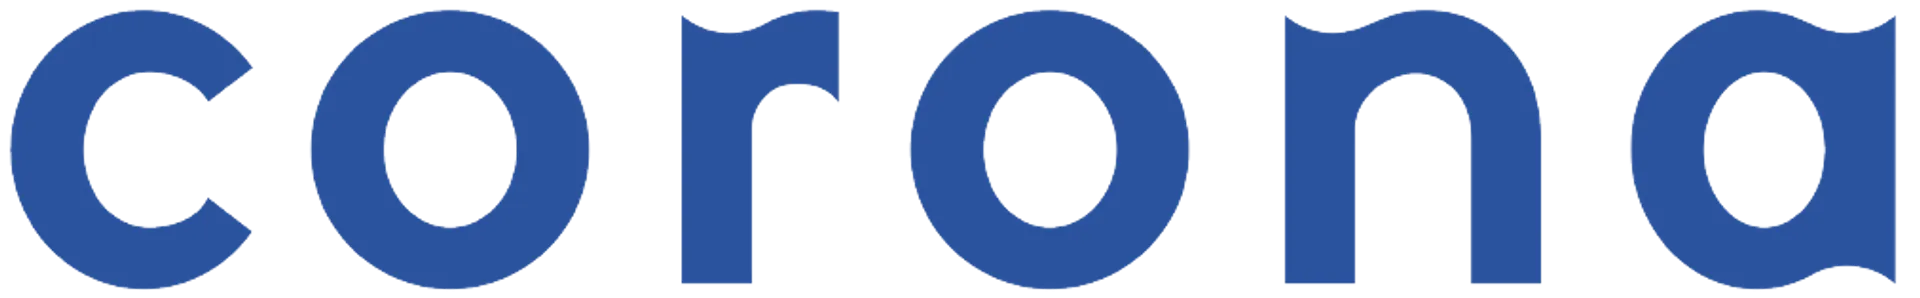 CORONA logo